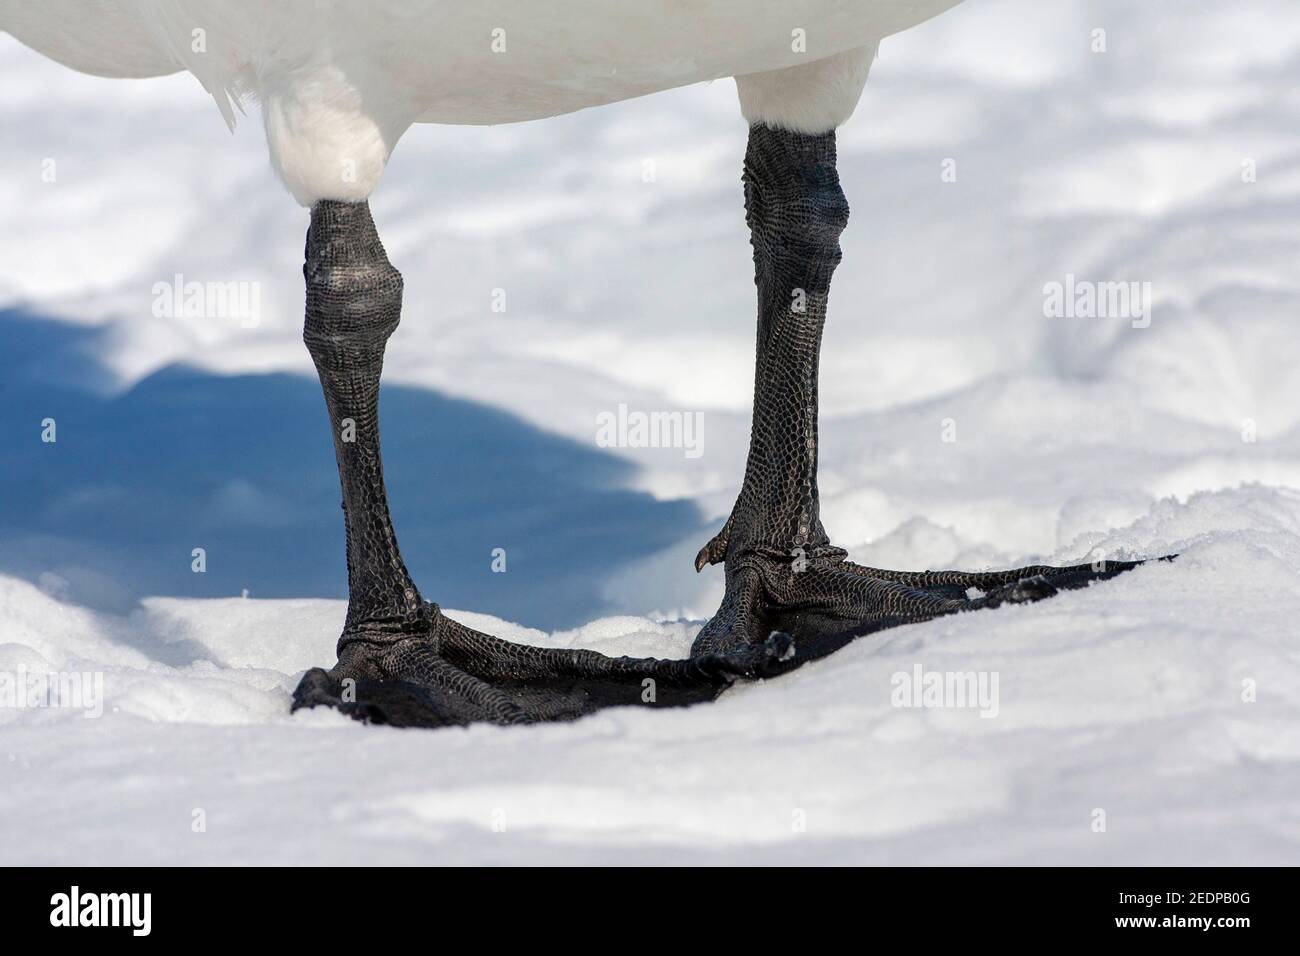 whooper swan (Cygnus cygnus), Closeup of the feet of a Whooper Swan, standing in the snow, Japan, Hokkaido Stock Photo